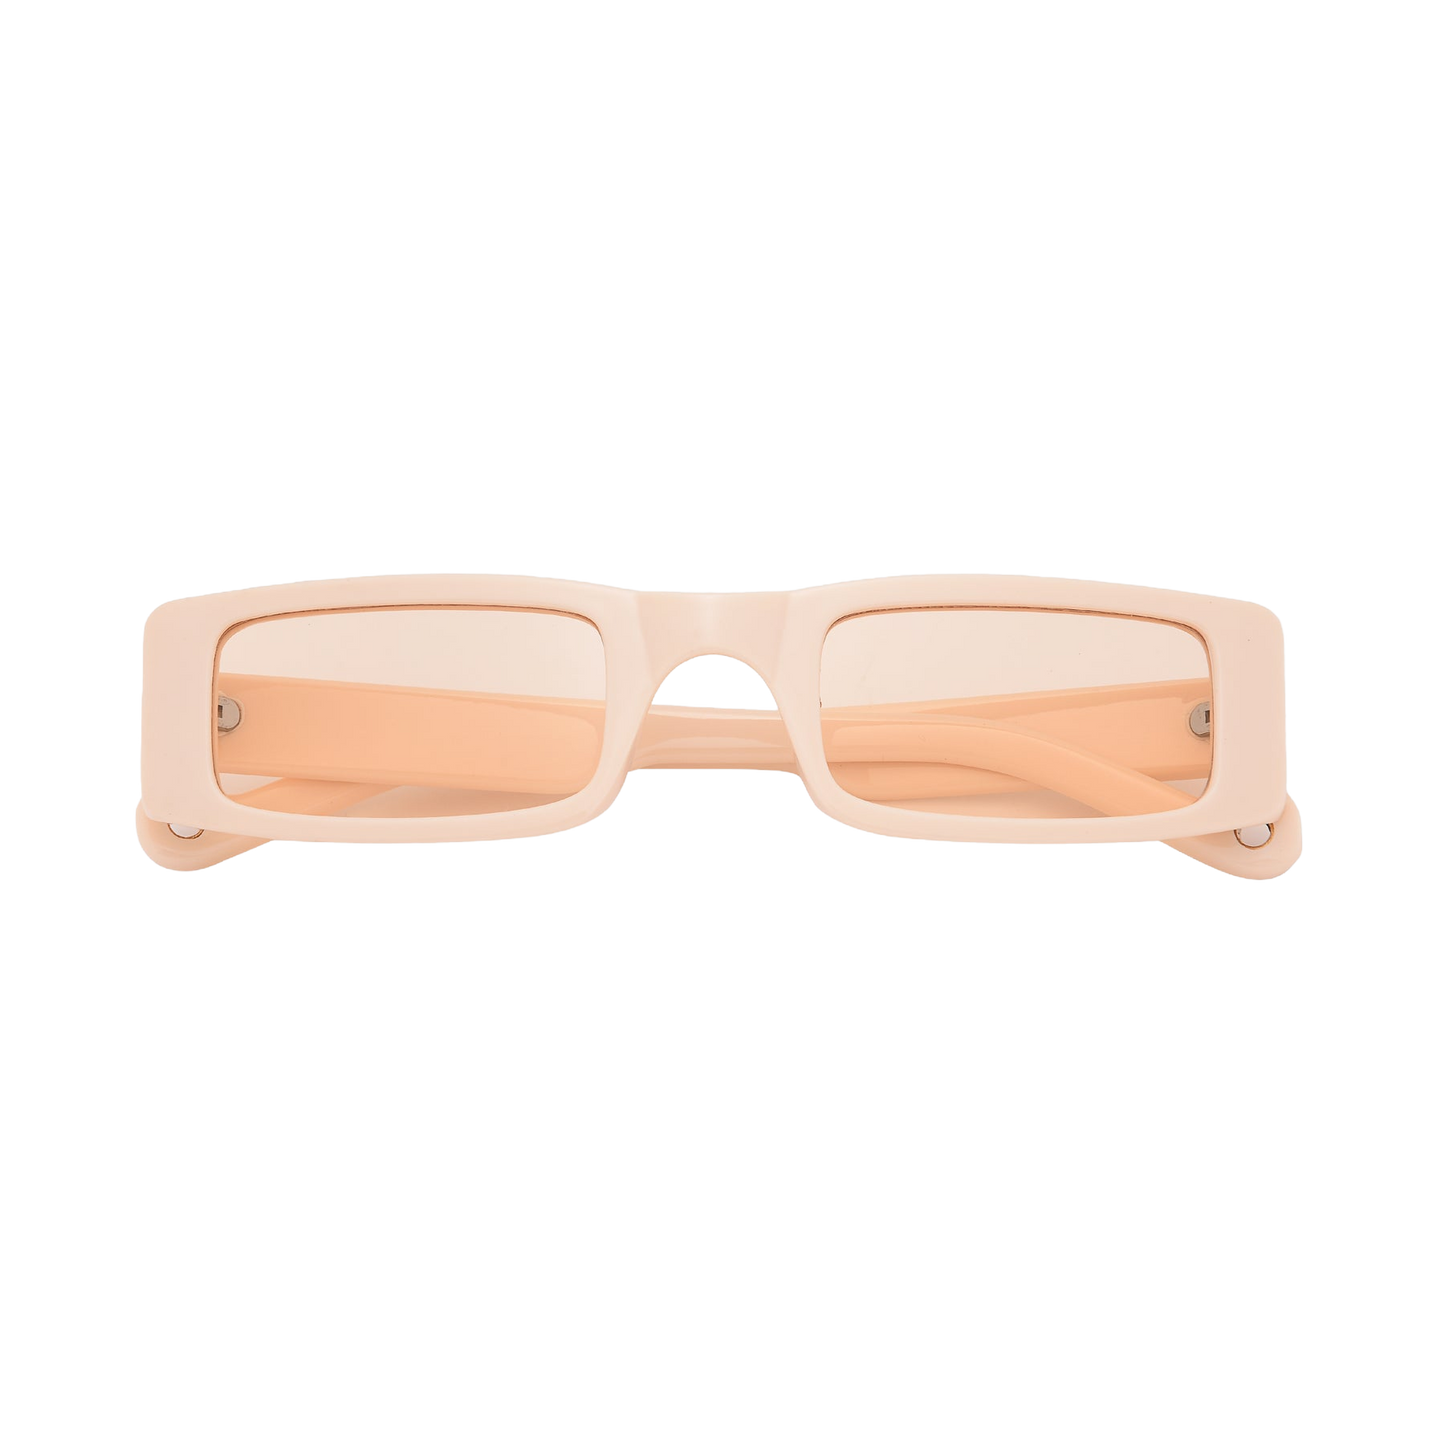 beige rectangular Sunglasses Eyewear Festival outfit